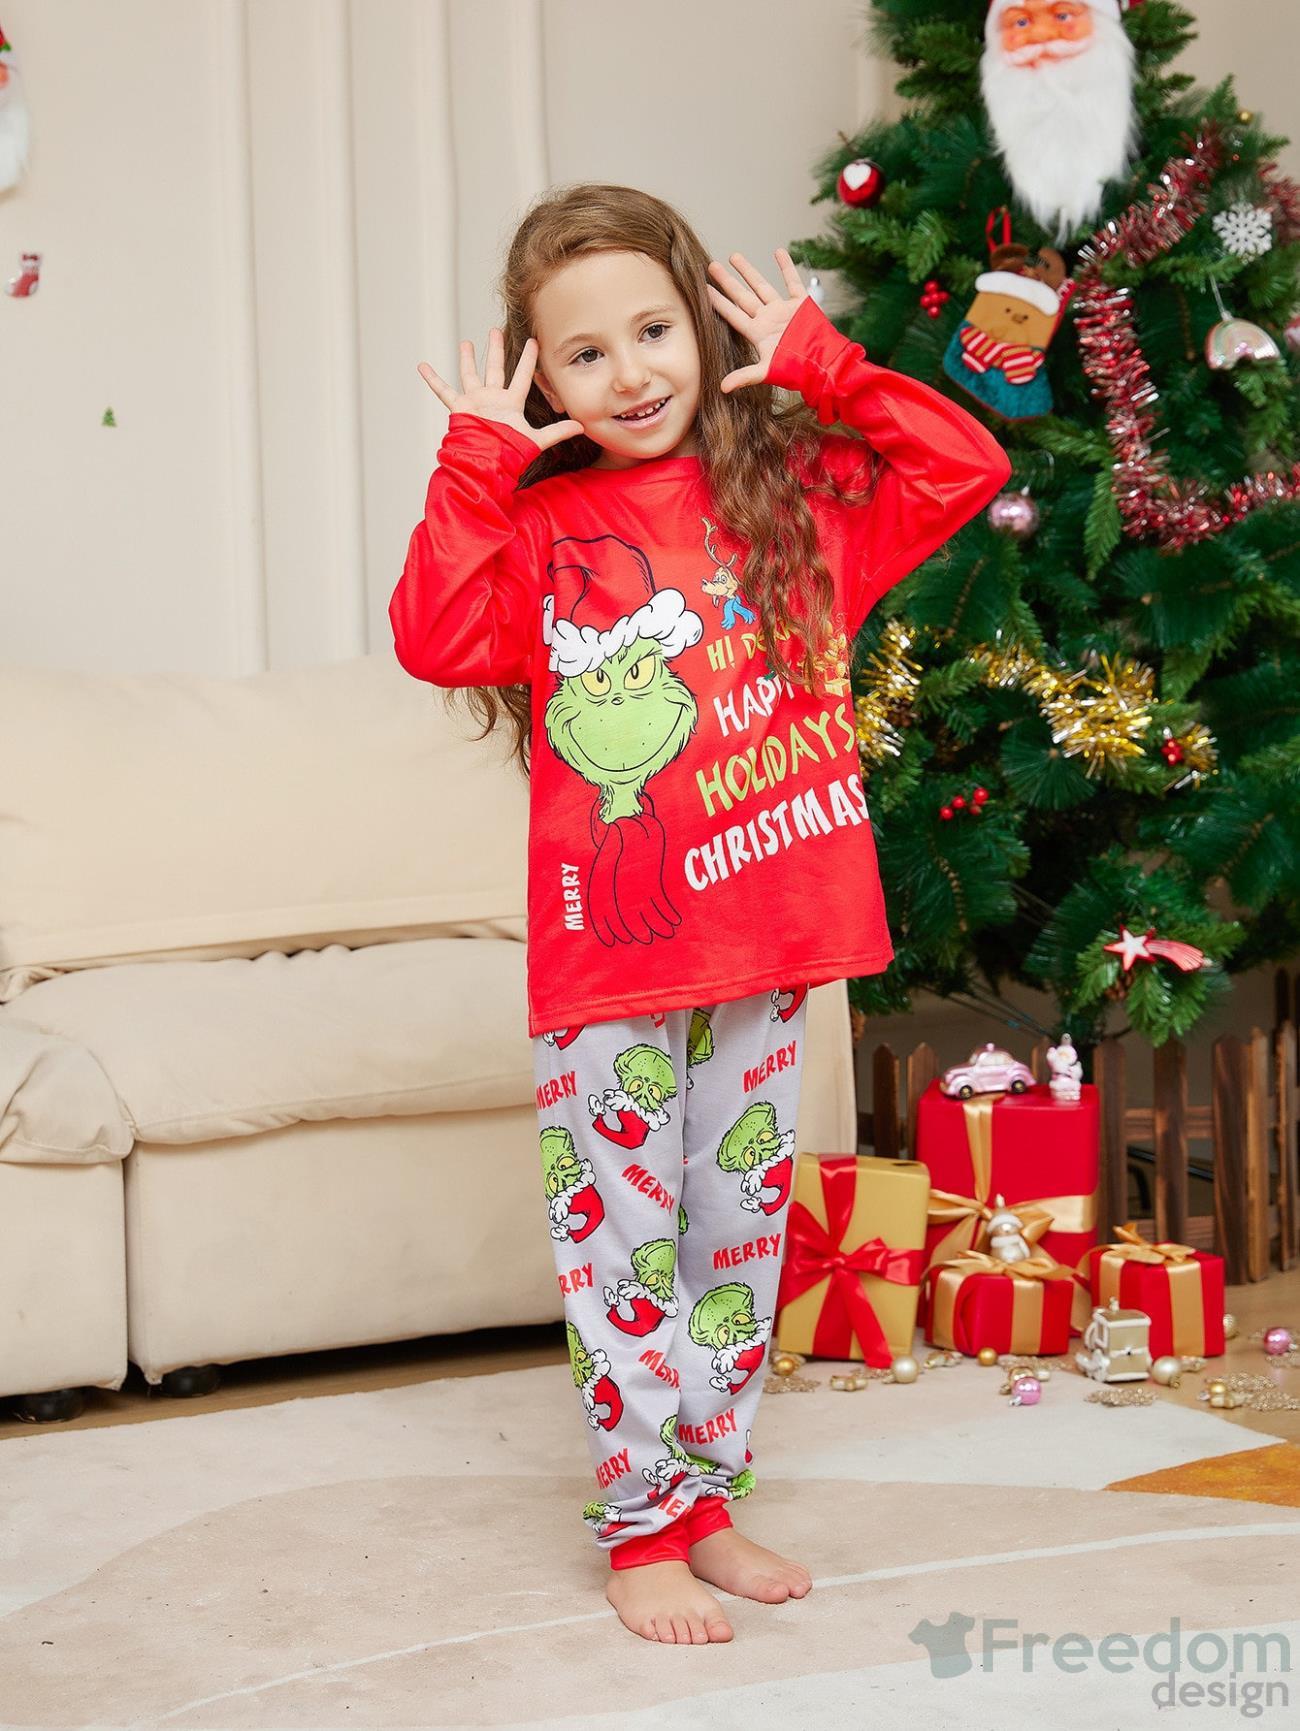 Grinch Christmas Pjs For Family,Women Pajamas Set-Green Monster Pattern,  Merry Christmas Pattern Gift 